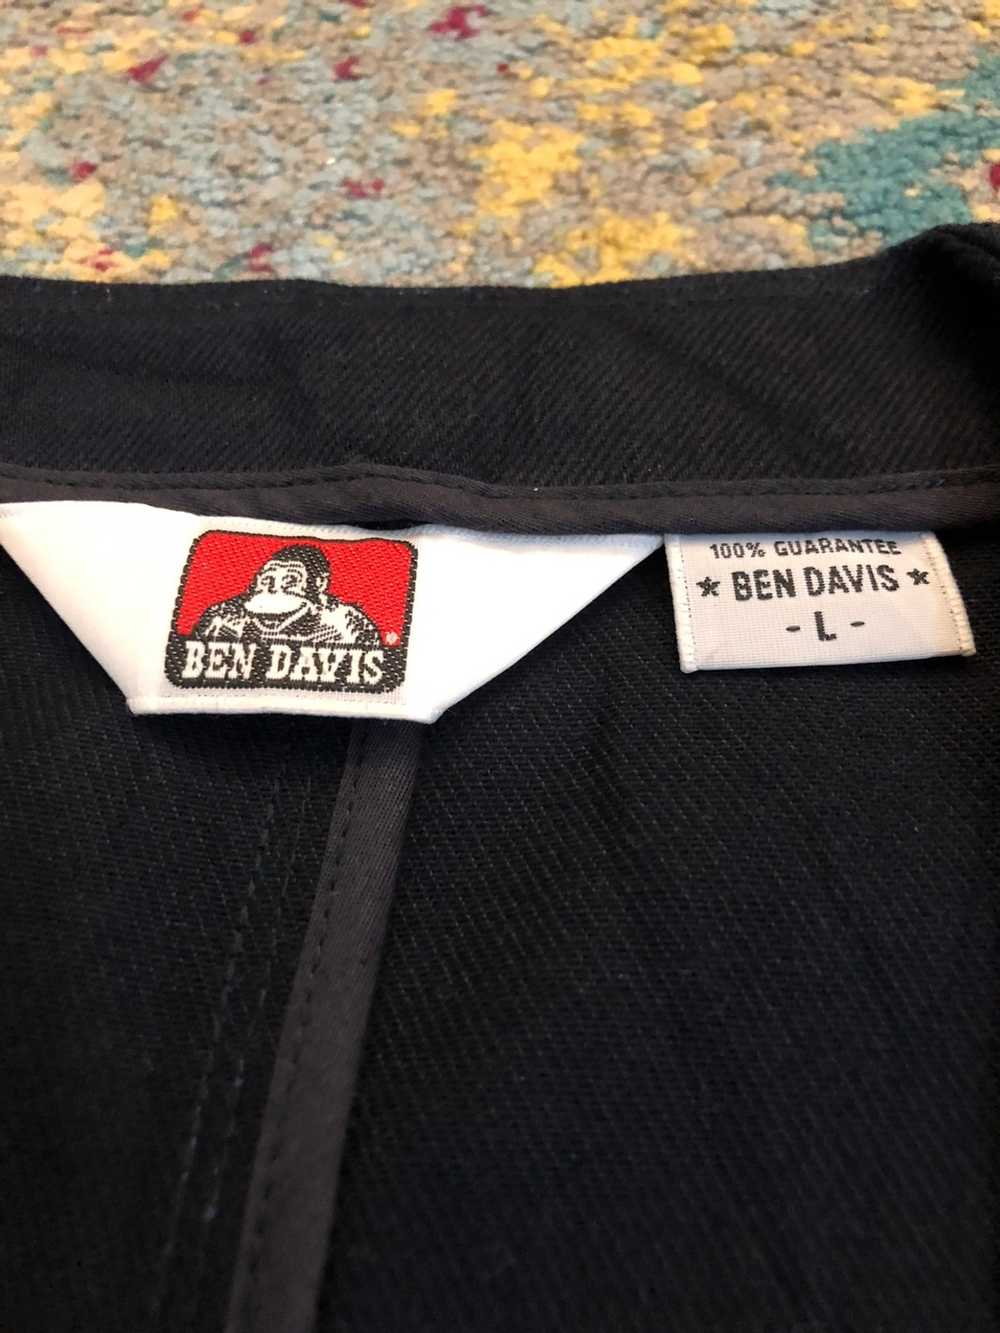 Ben Davis × Japanese Brand Ben Davis Vest Jacket - image 8